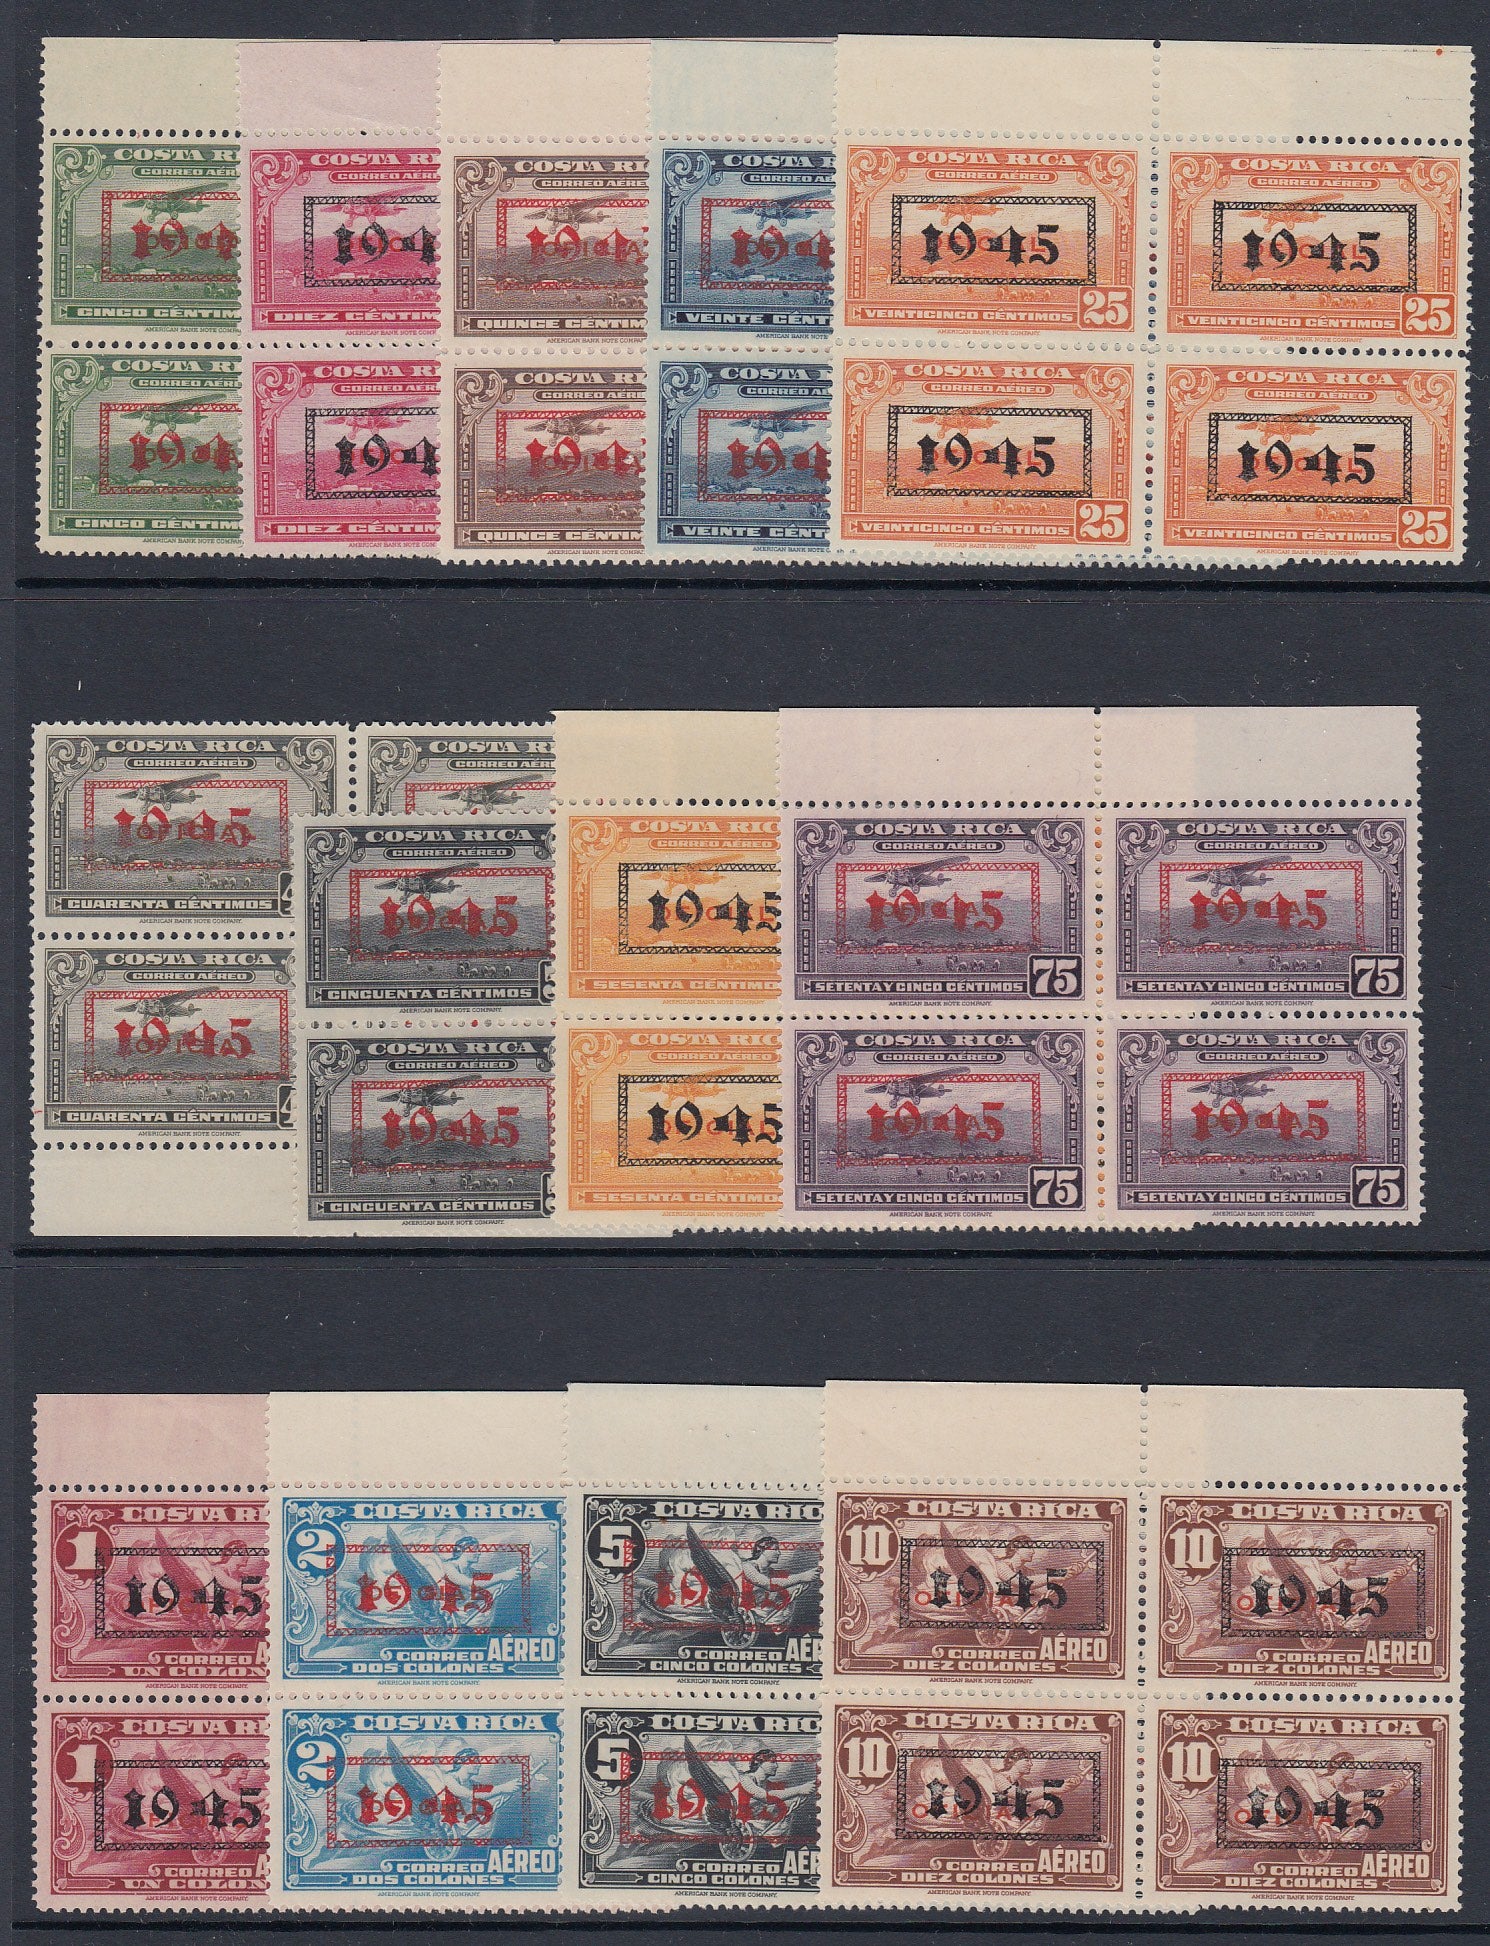 Costa Rica 1945 Airmail Overprints in Marginal Blocks of Four MNH. Scott C104-C116